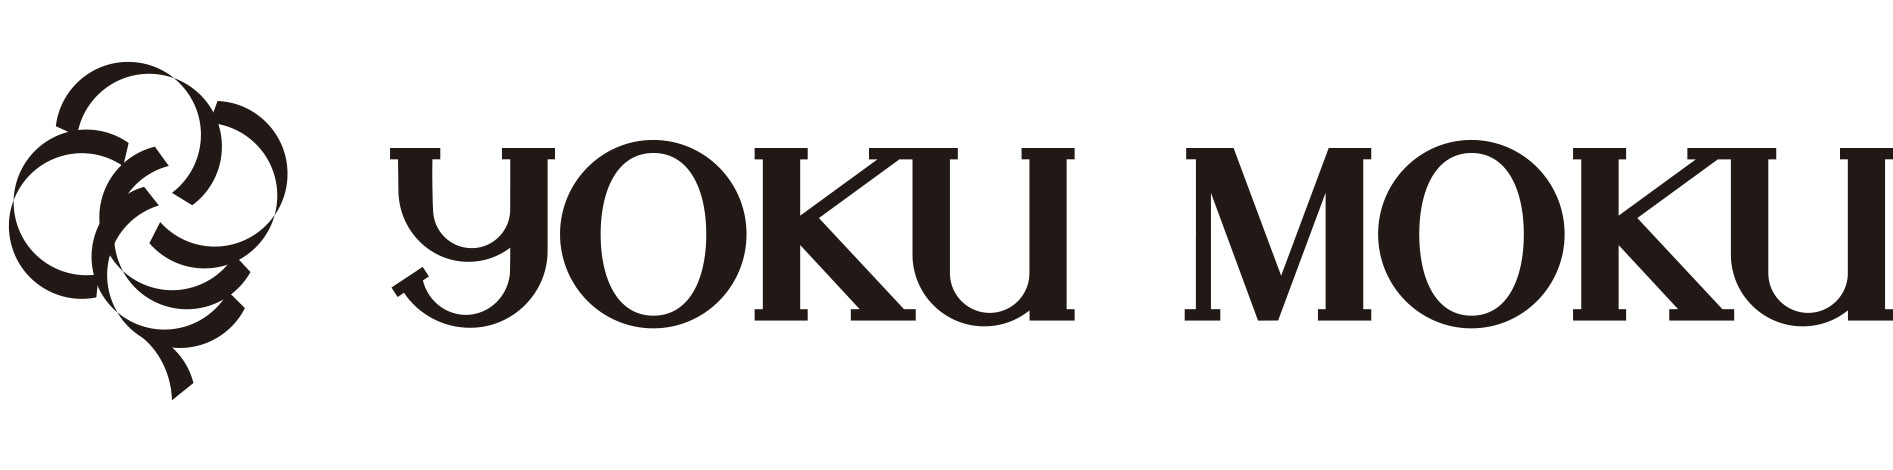 YOKU MOKU Co., Ltd.